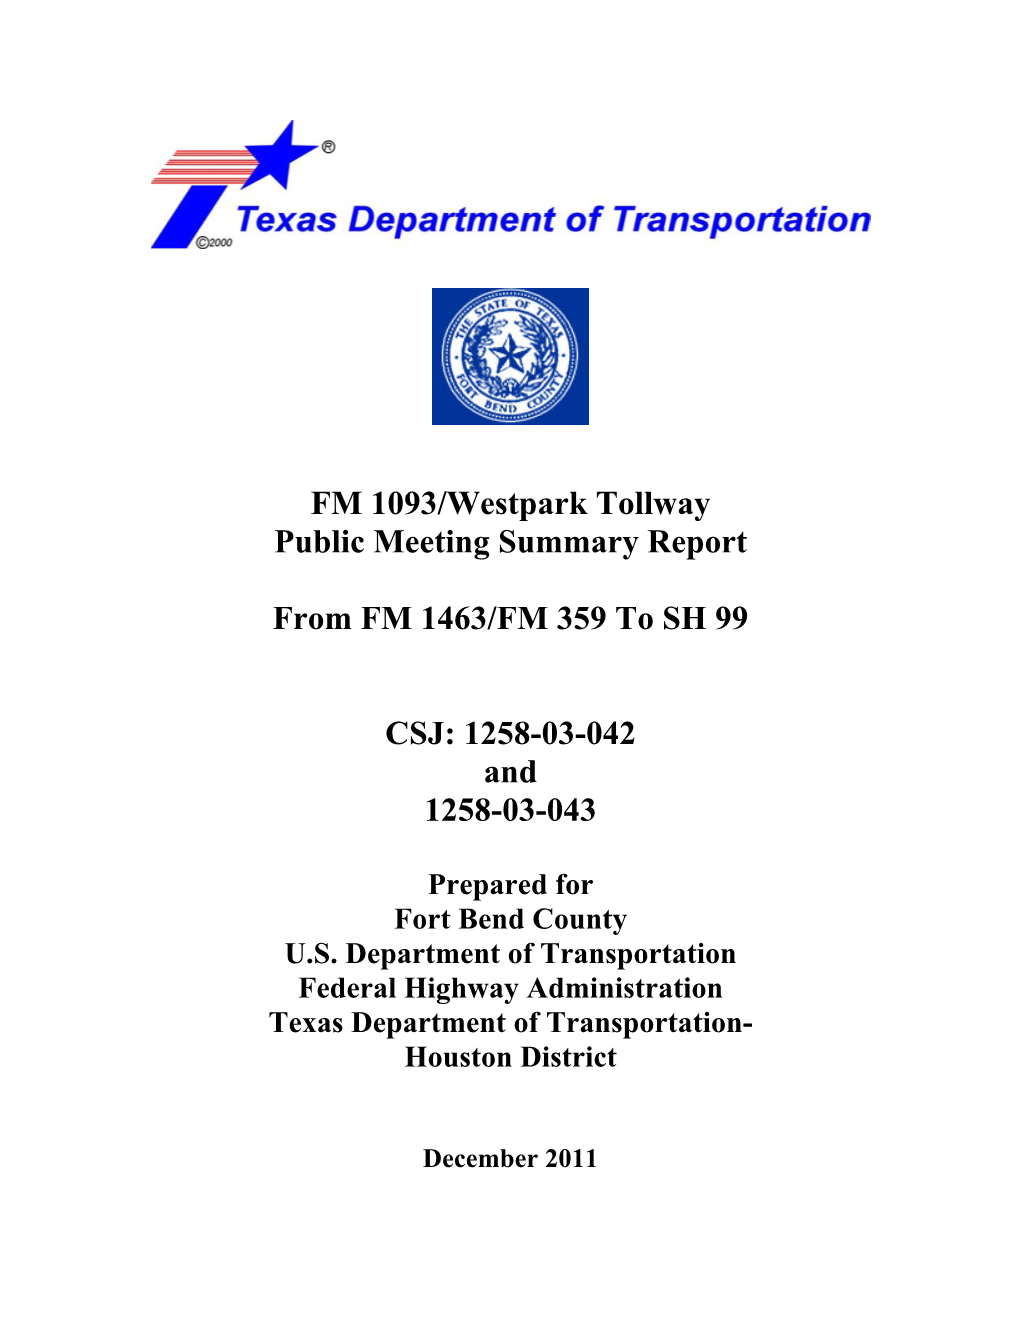 FM 1093/Westpark Tollway Public Meeting Summary Report